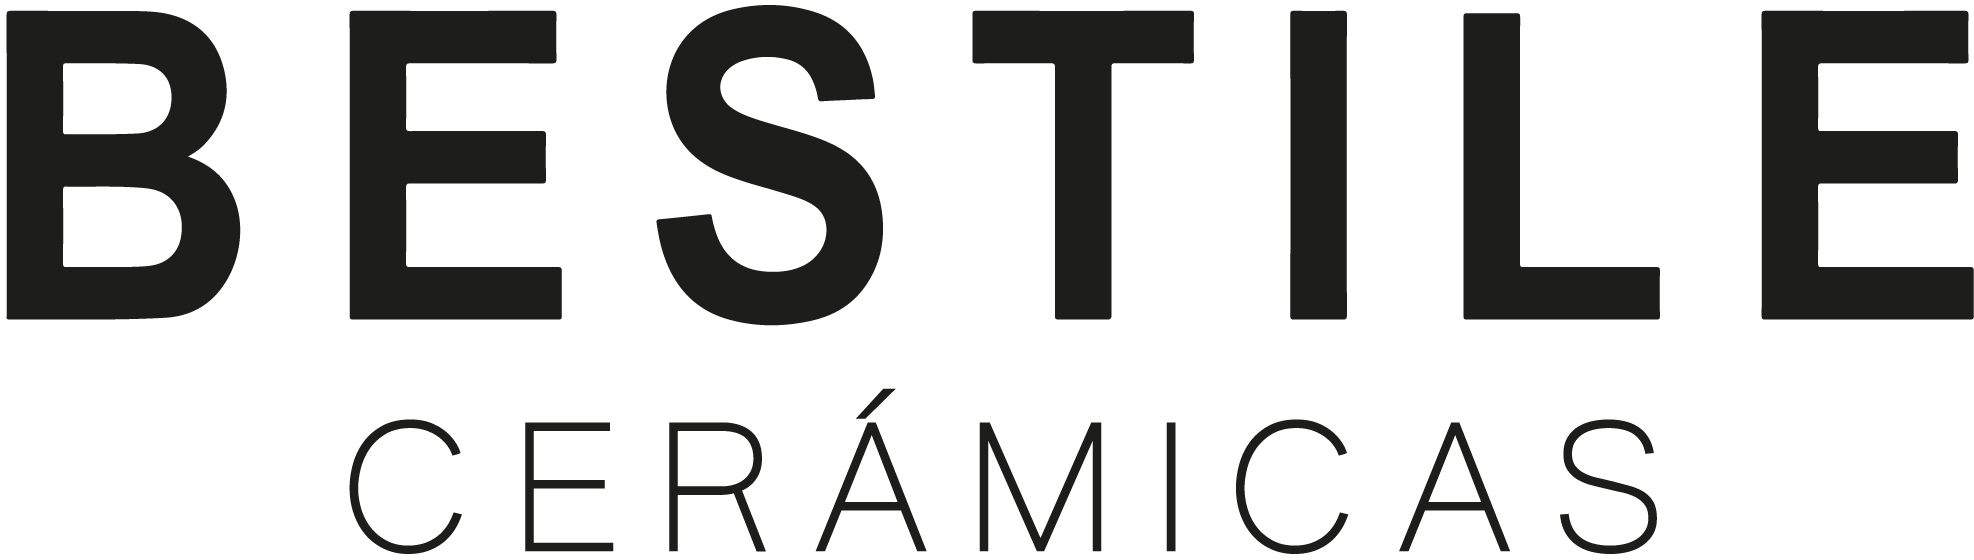 Bestile logo